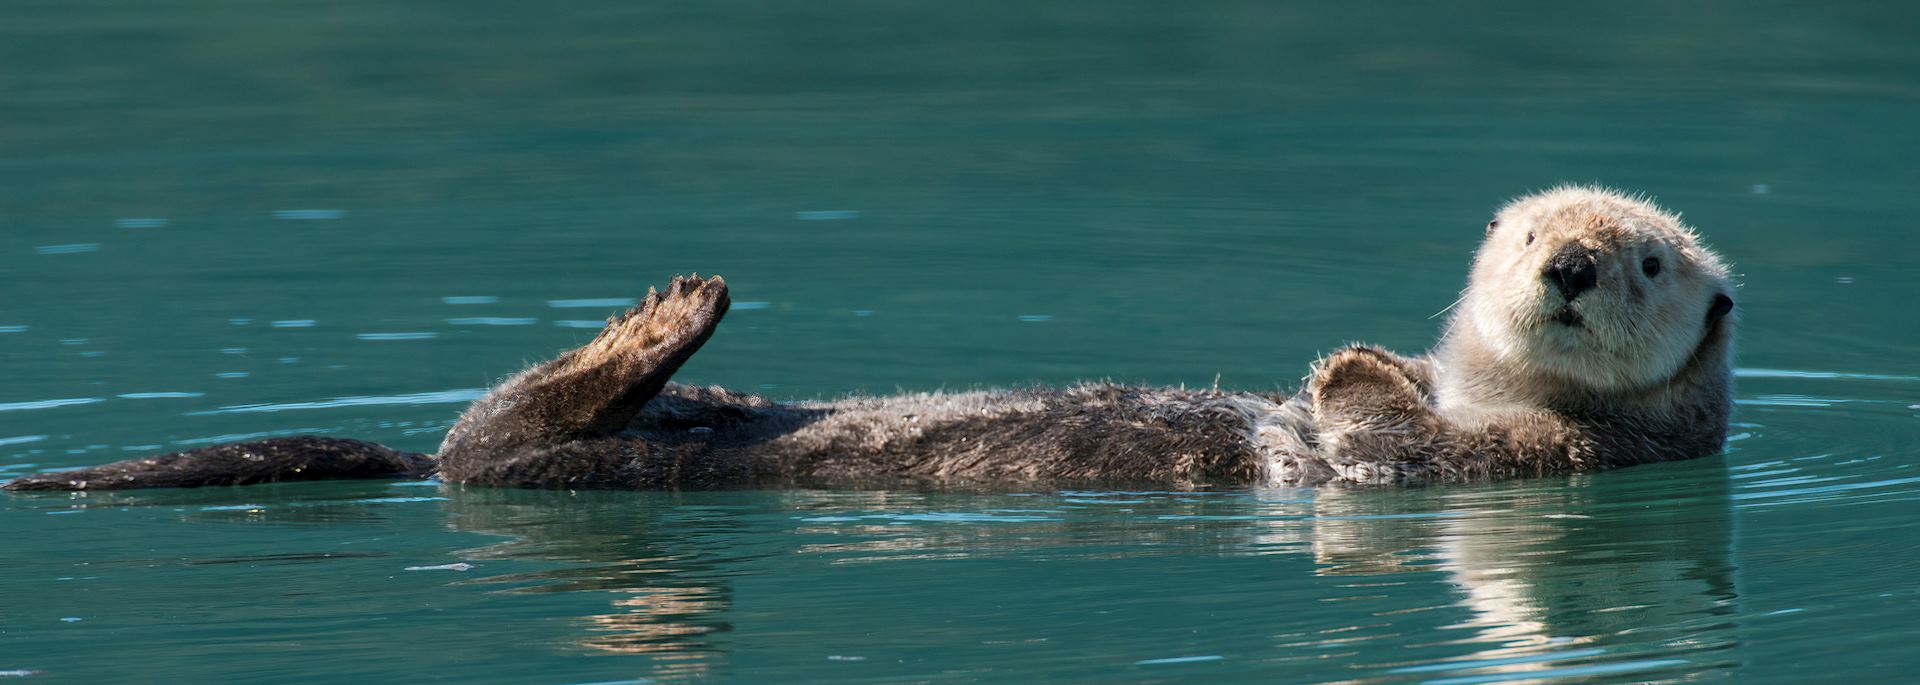 Otter in Prince William Sound